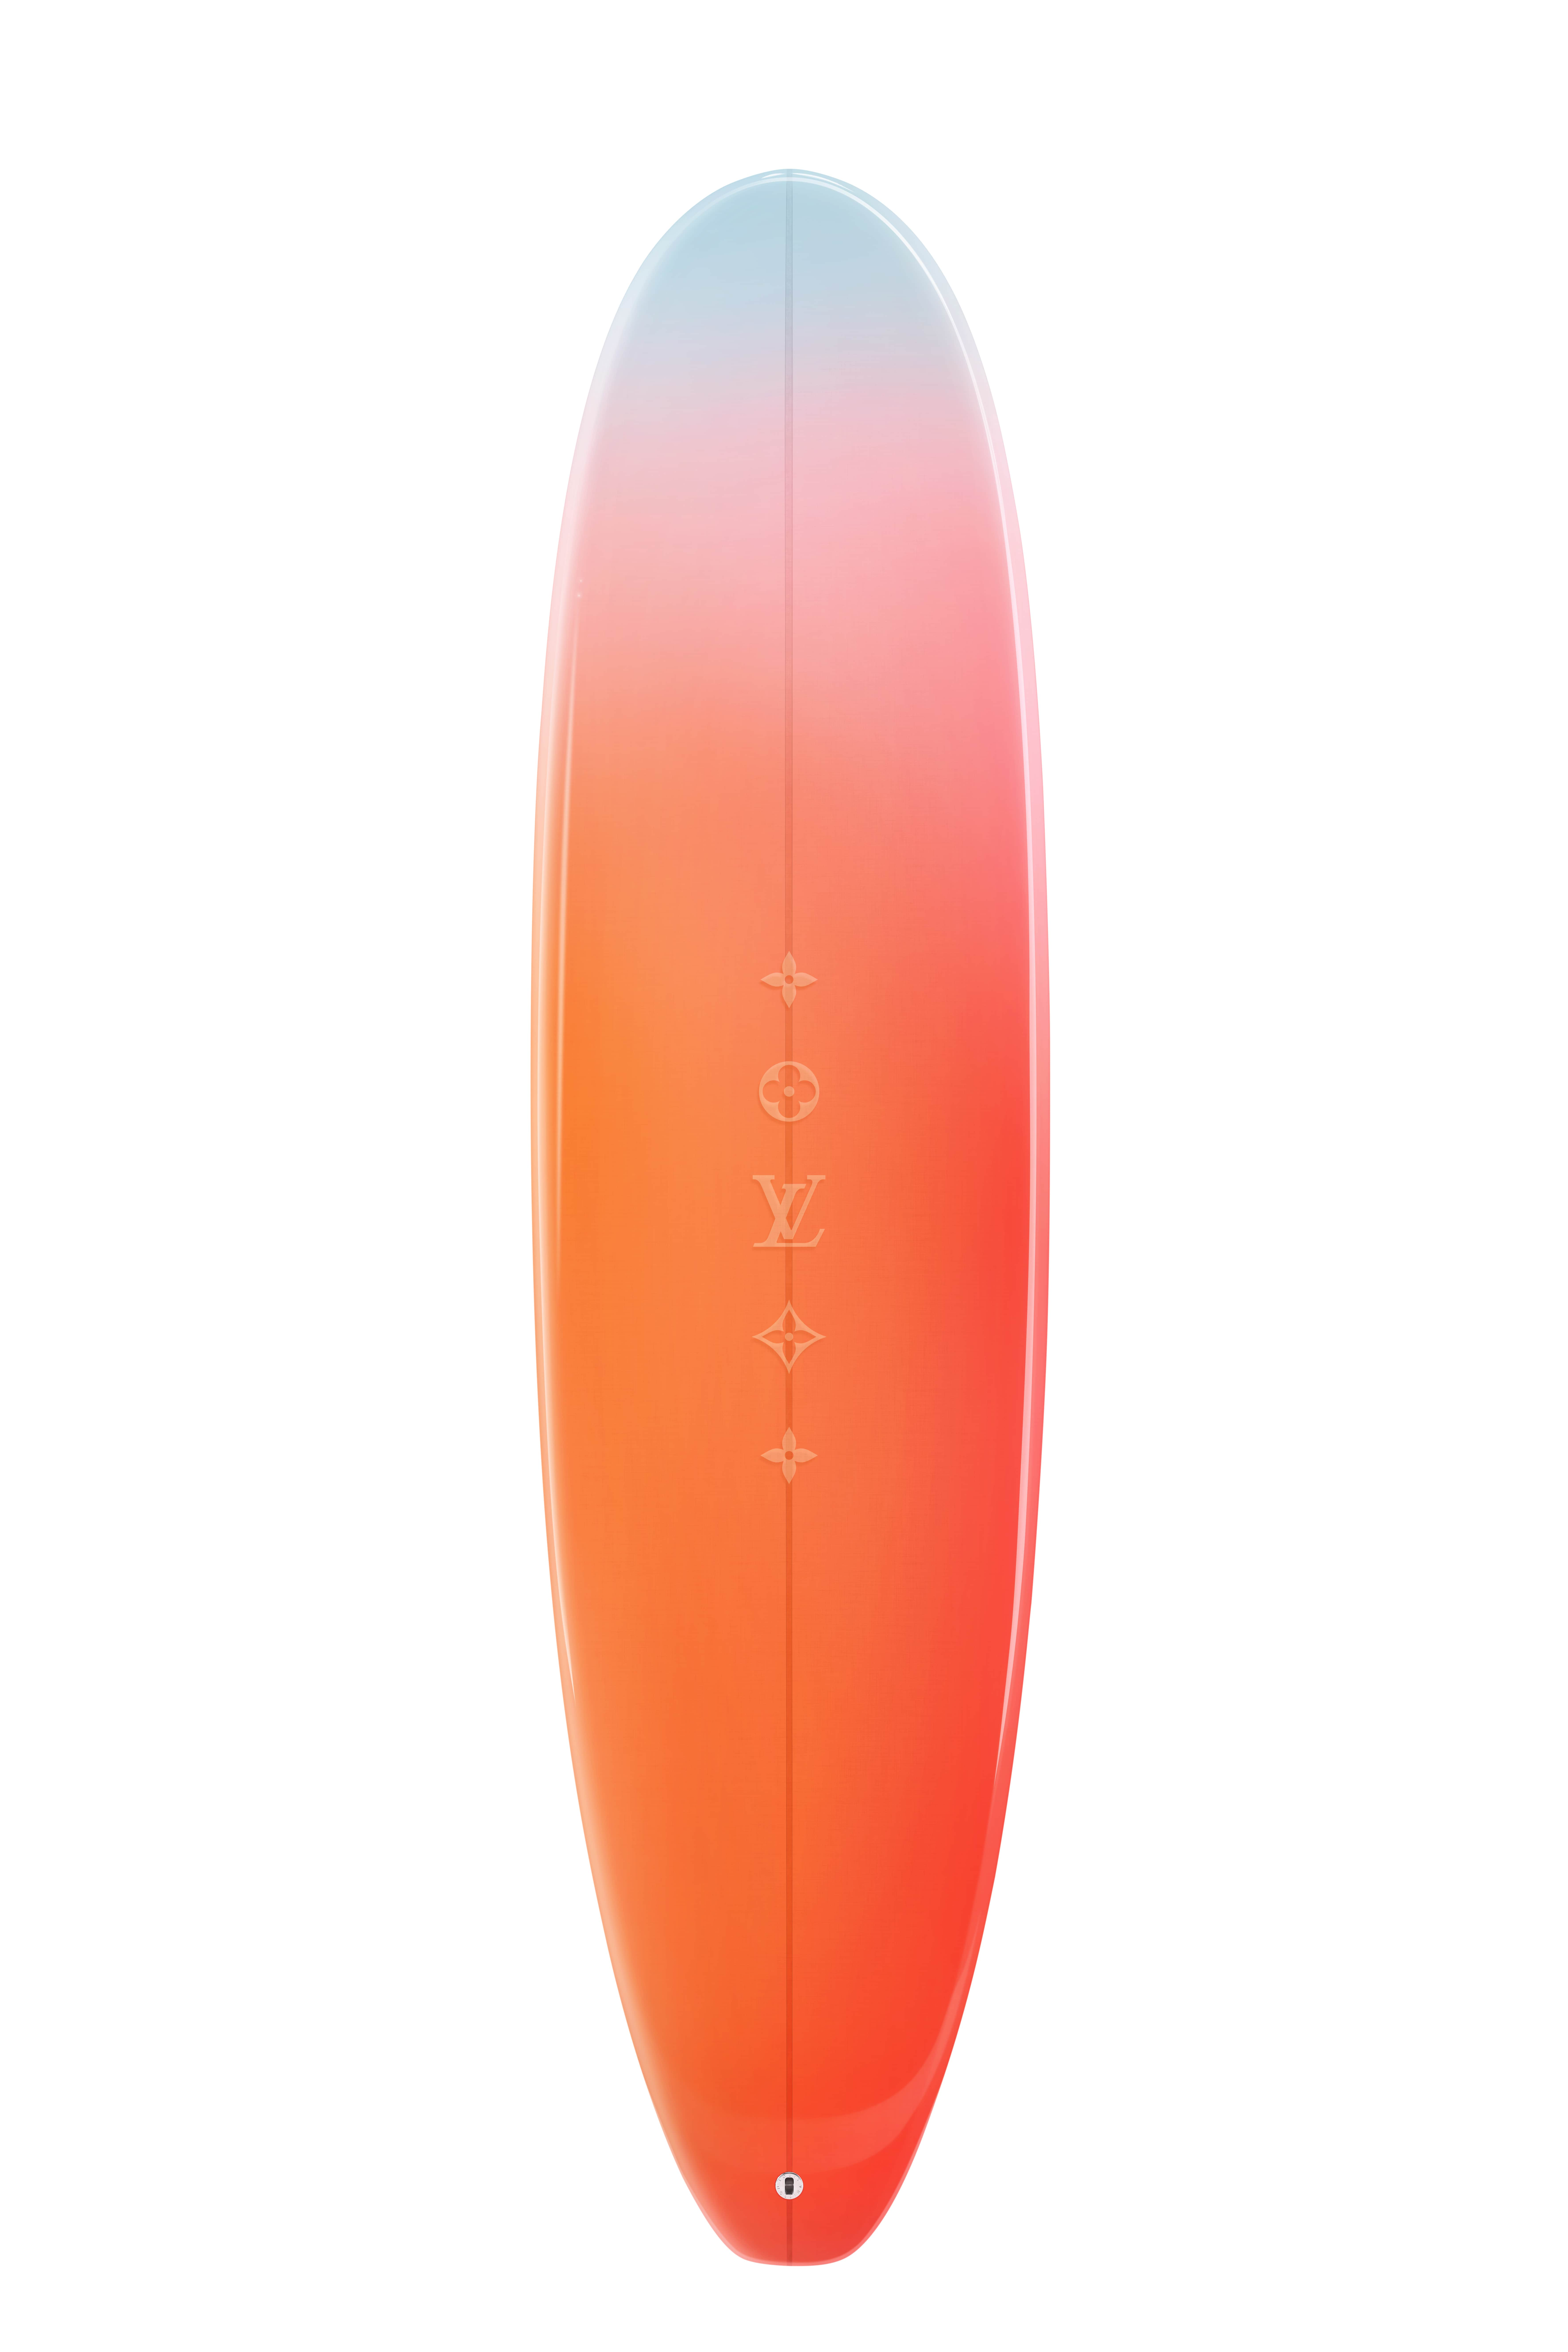 Alex Israel’s surfboard for Louis Vuitton